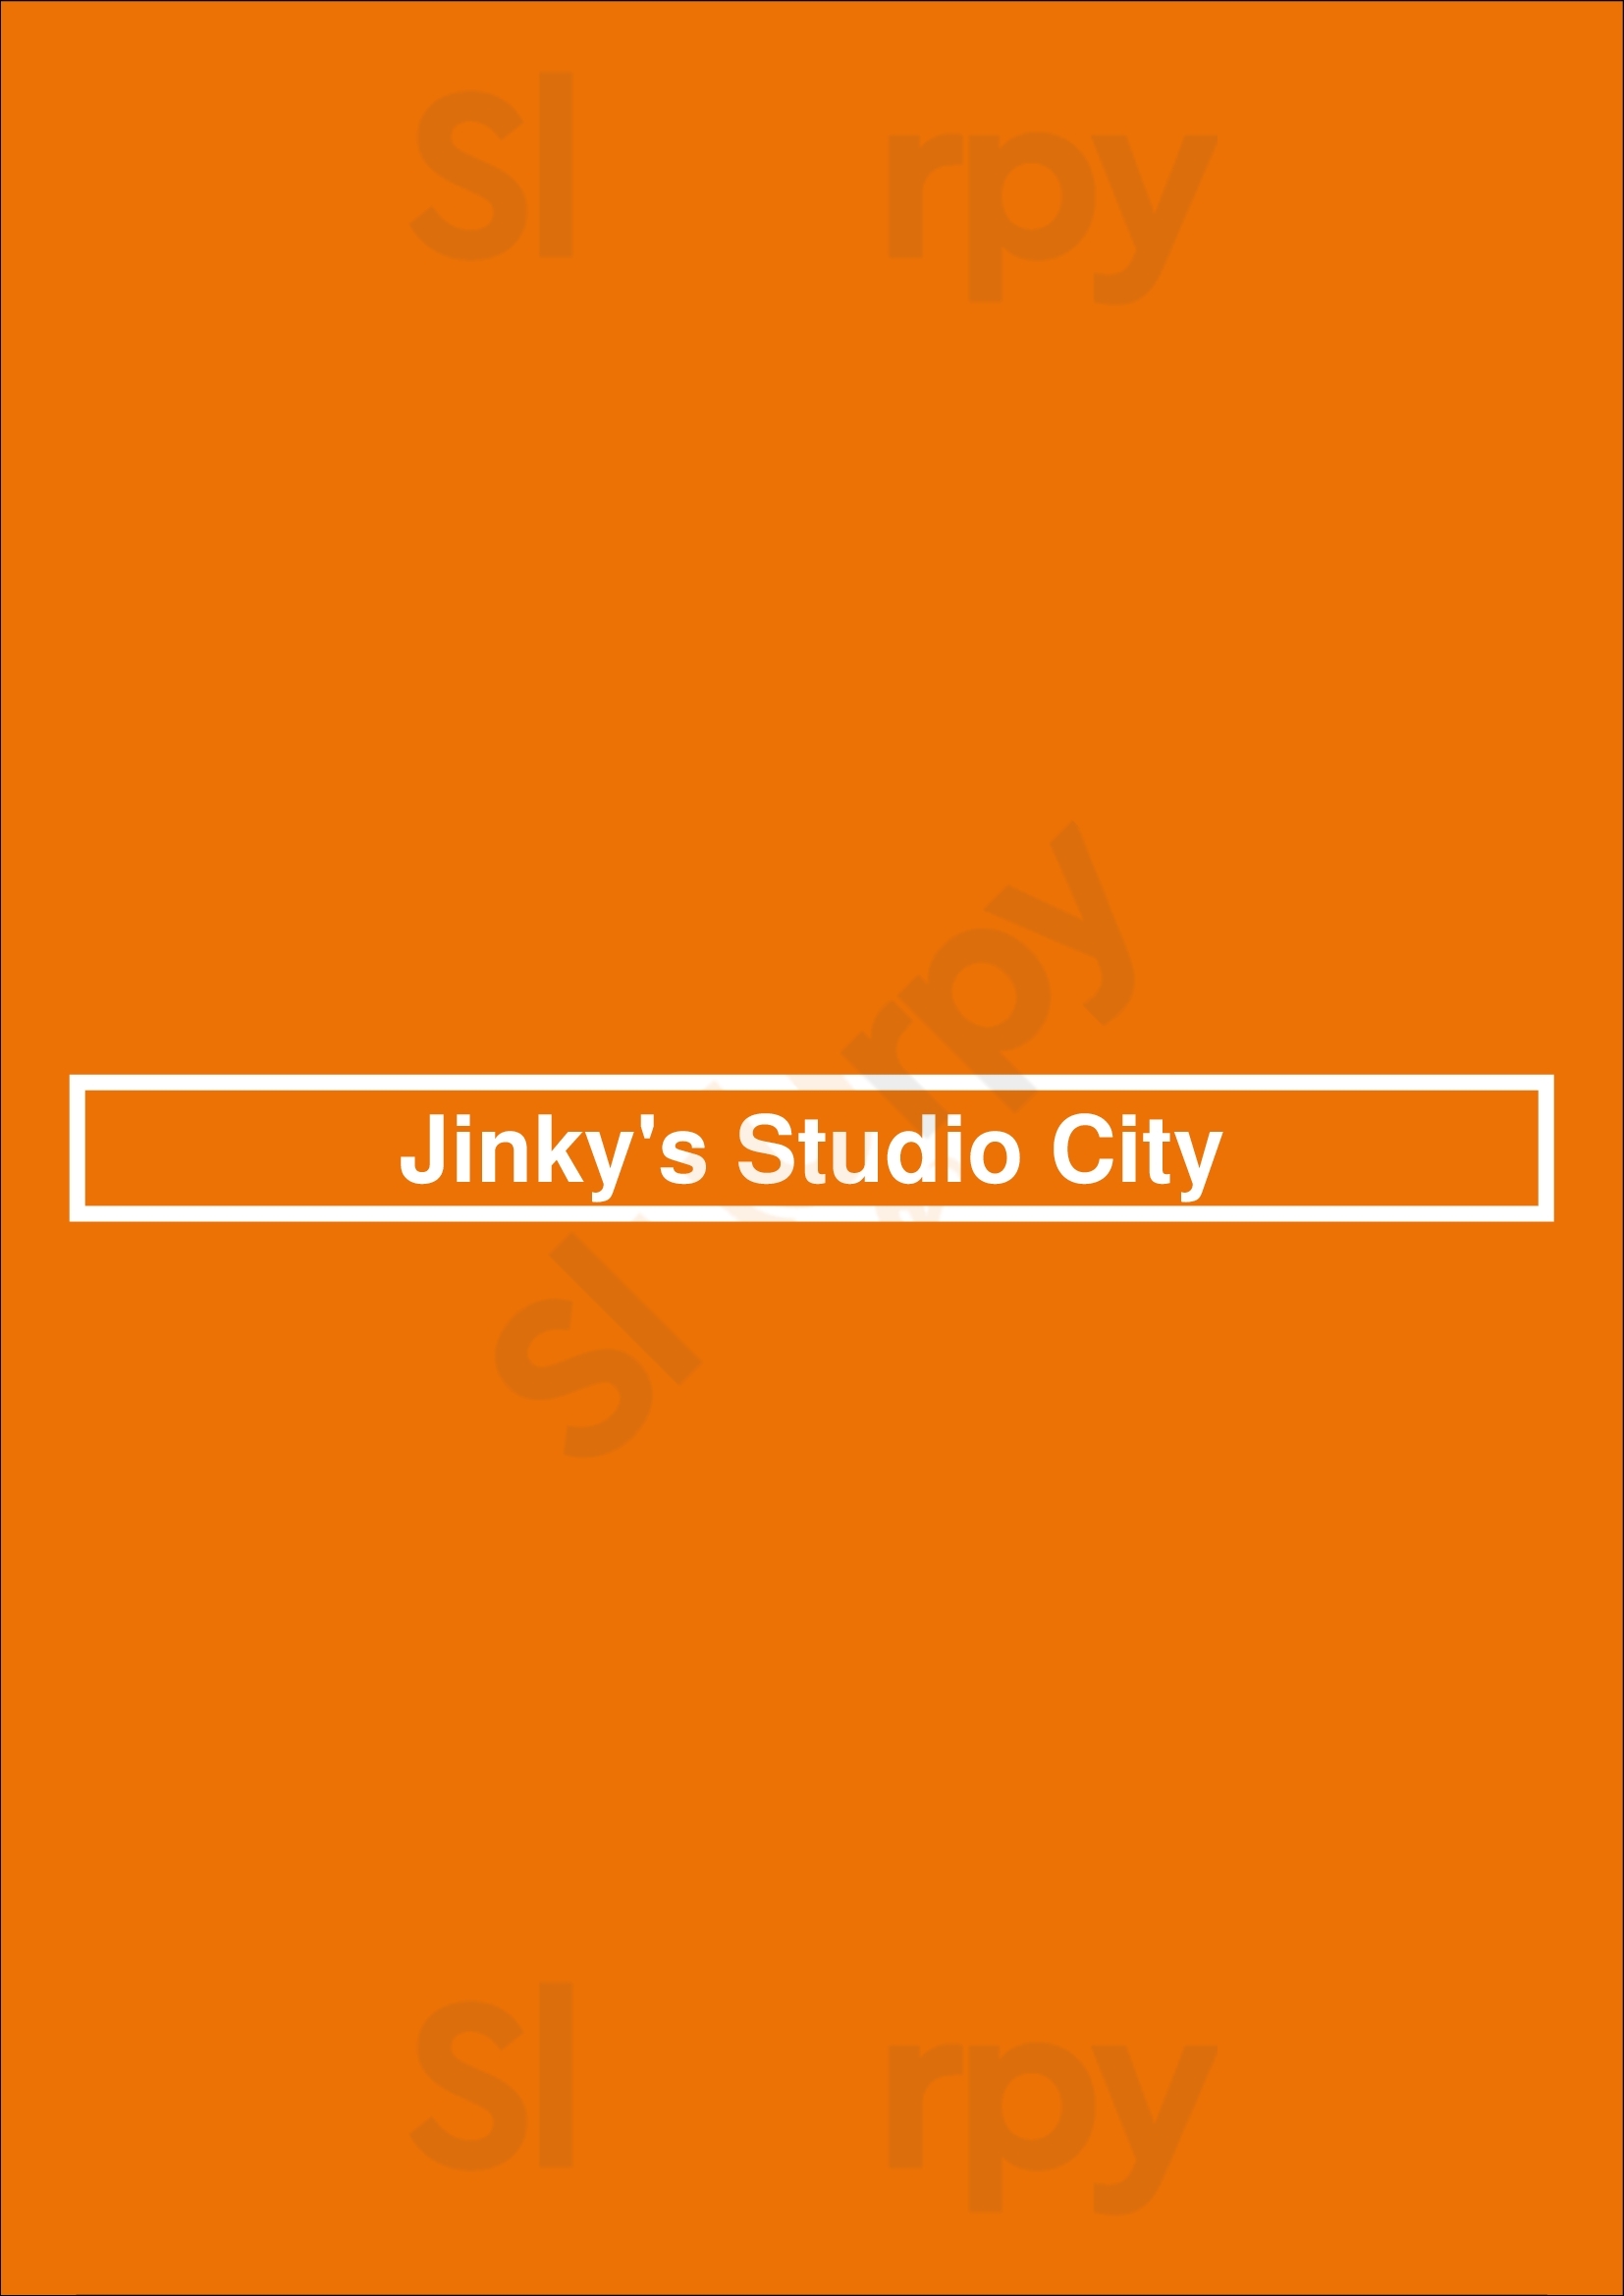 Jinky's Studio City Los Angeles Menu - 1